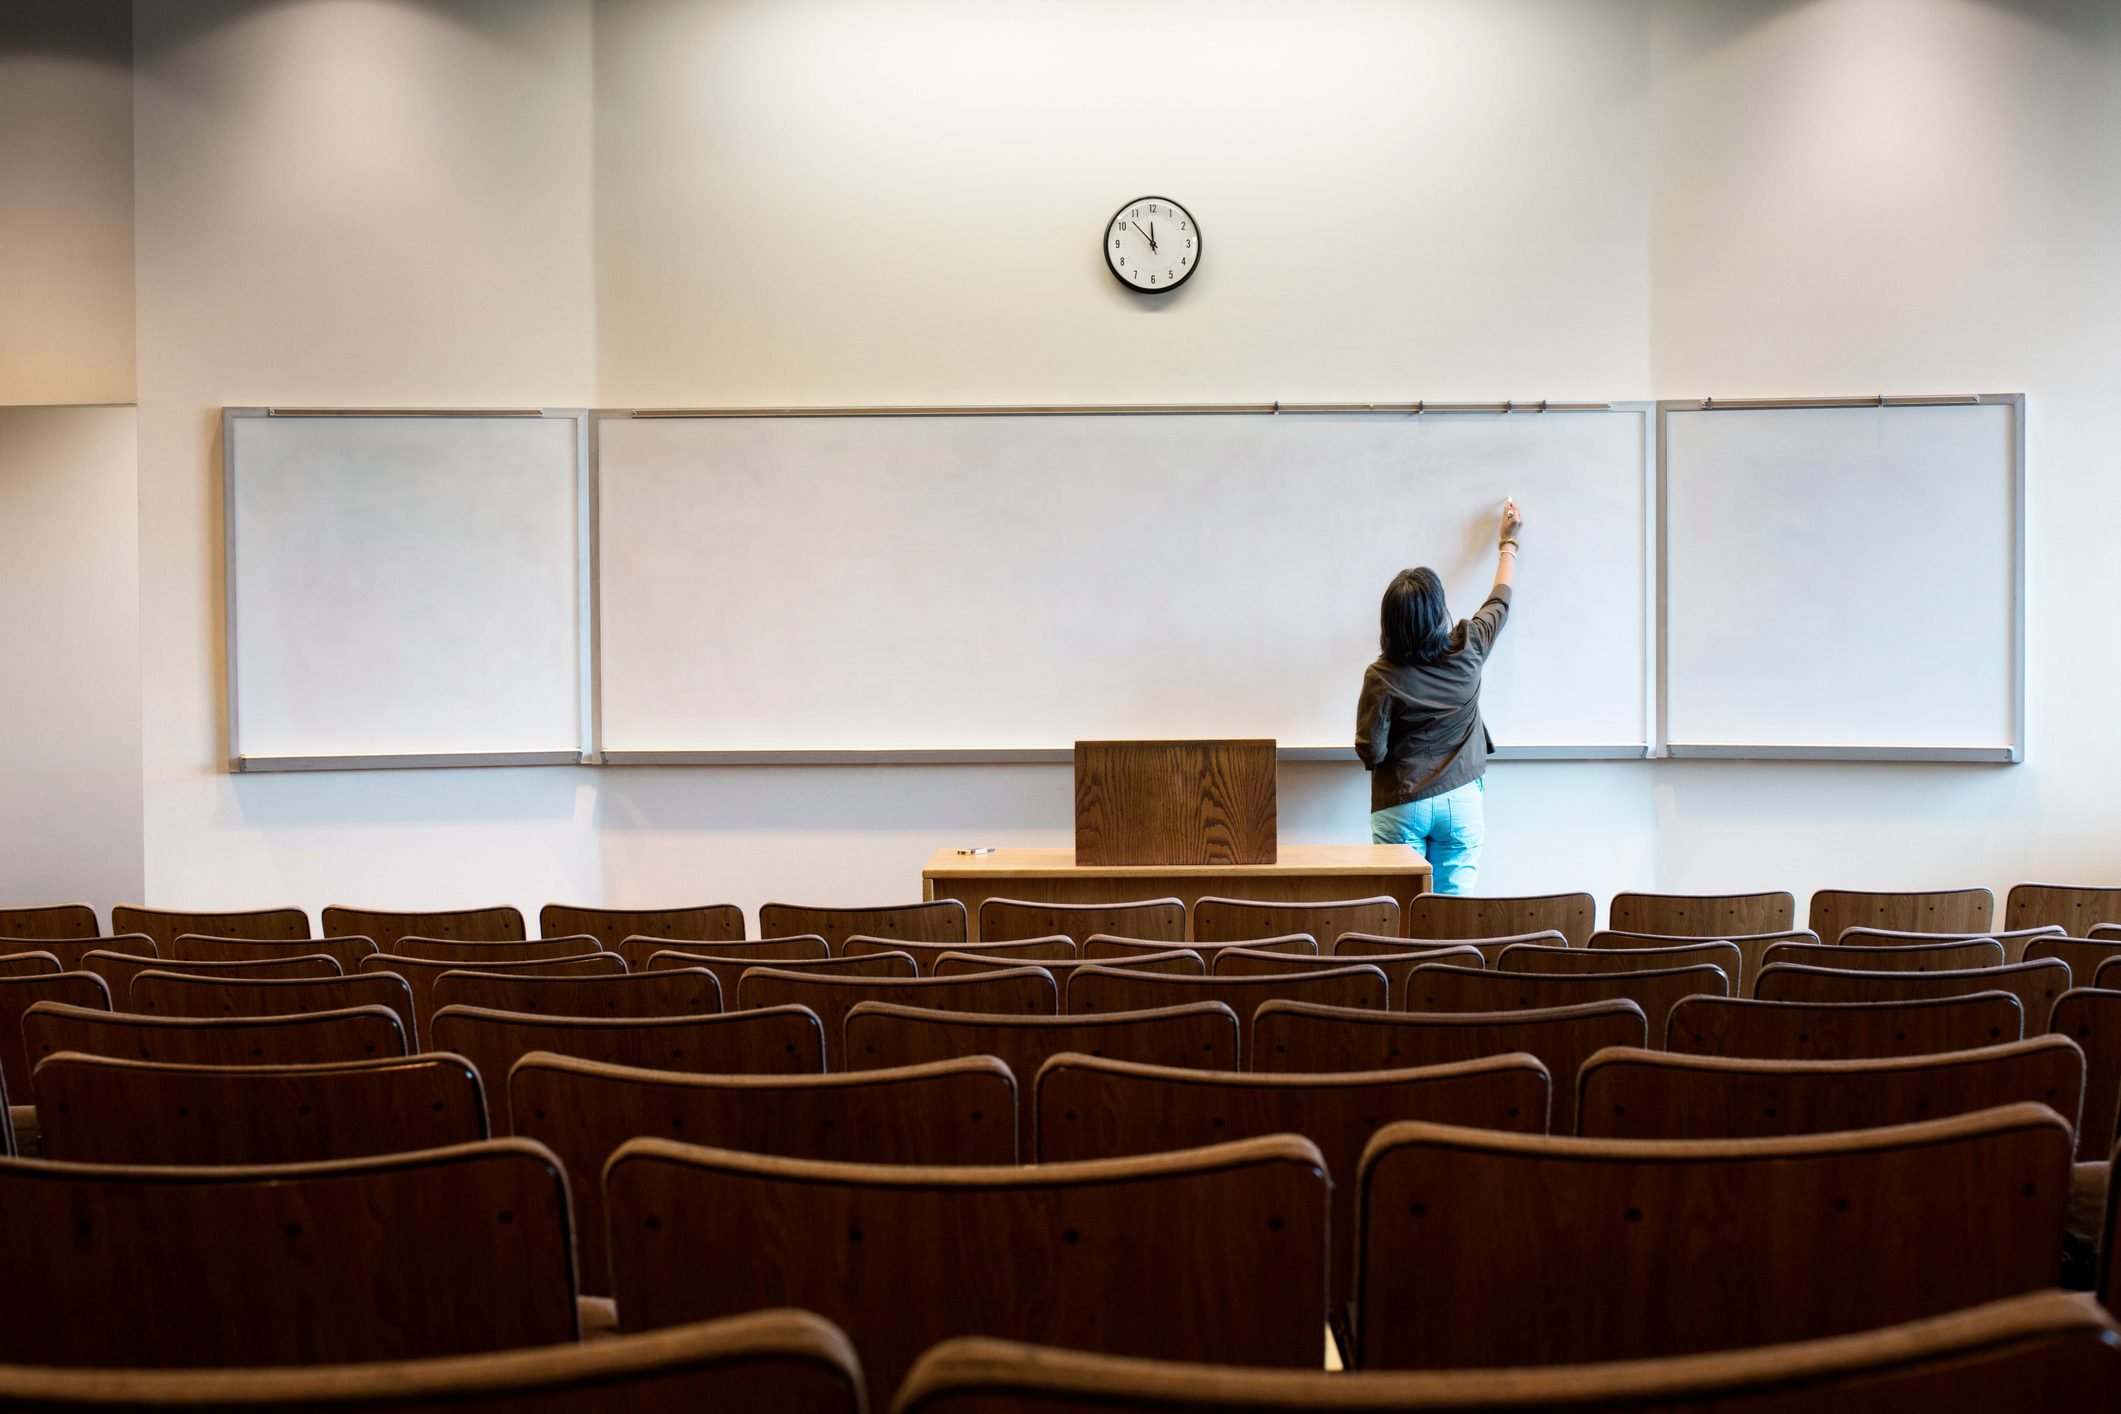 Filipino professor writing on whiteboard in empty lecture hall